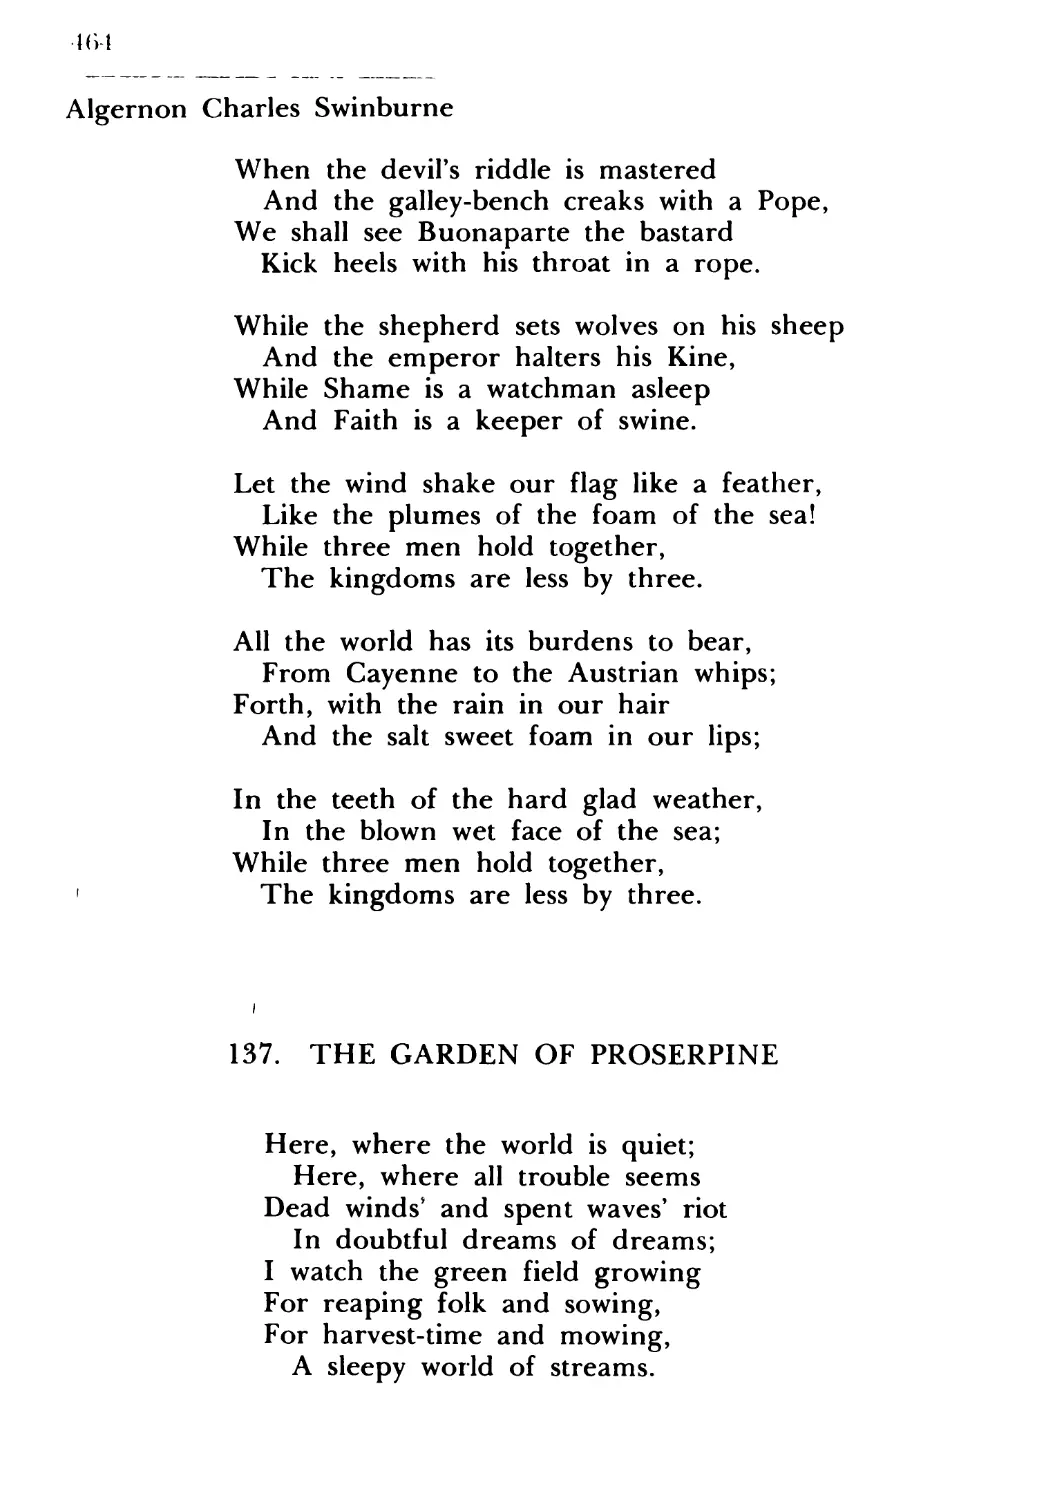 137. The Garden of Proserpine